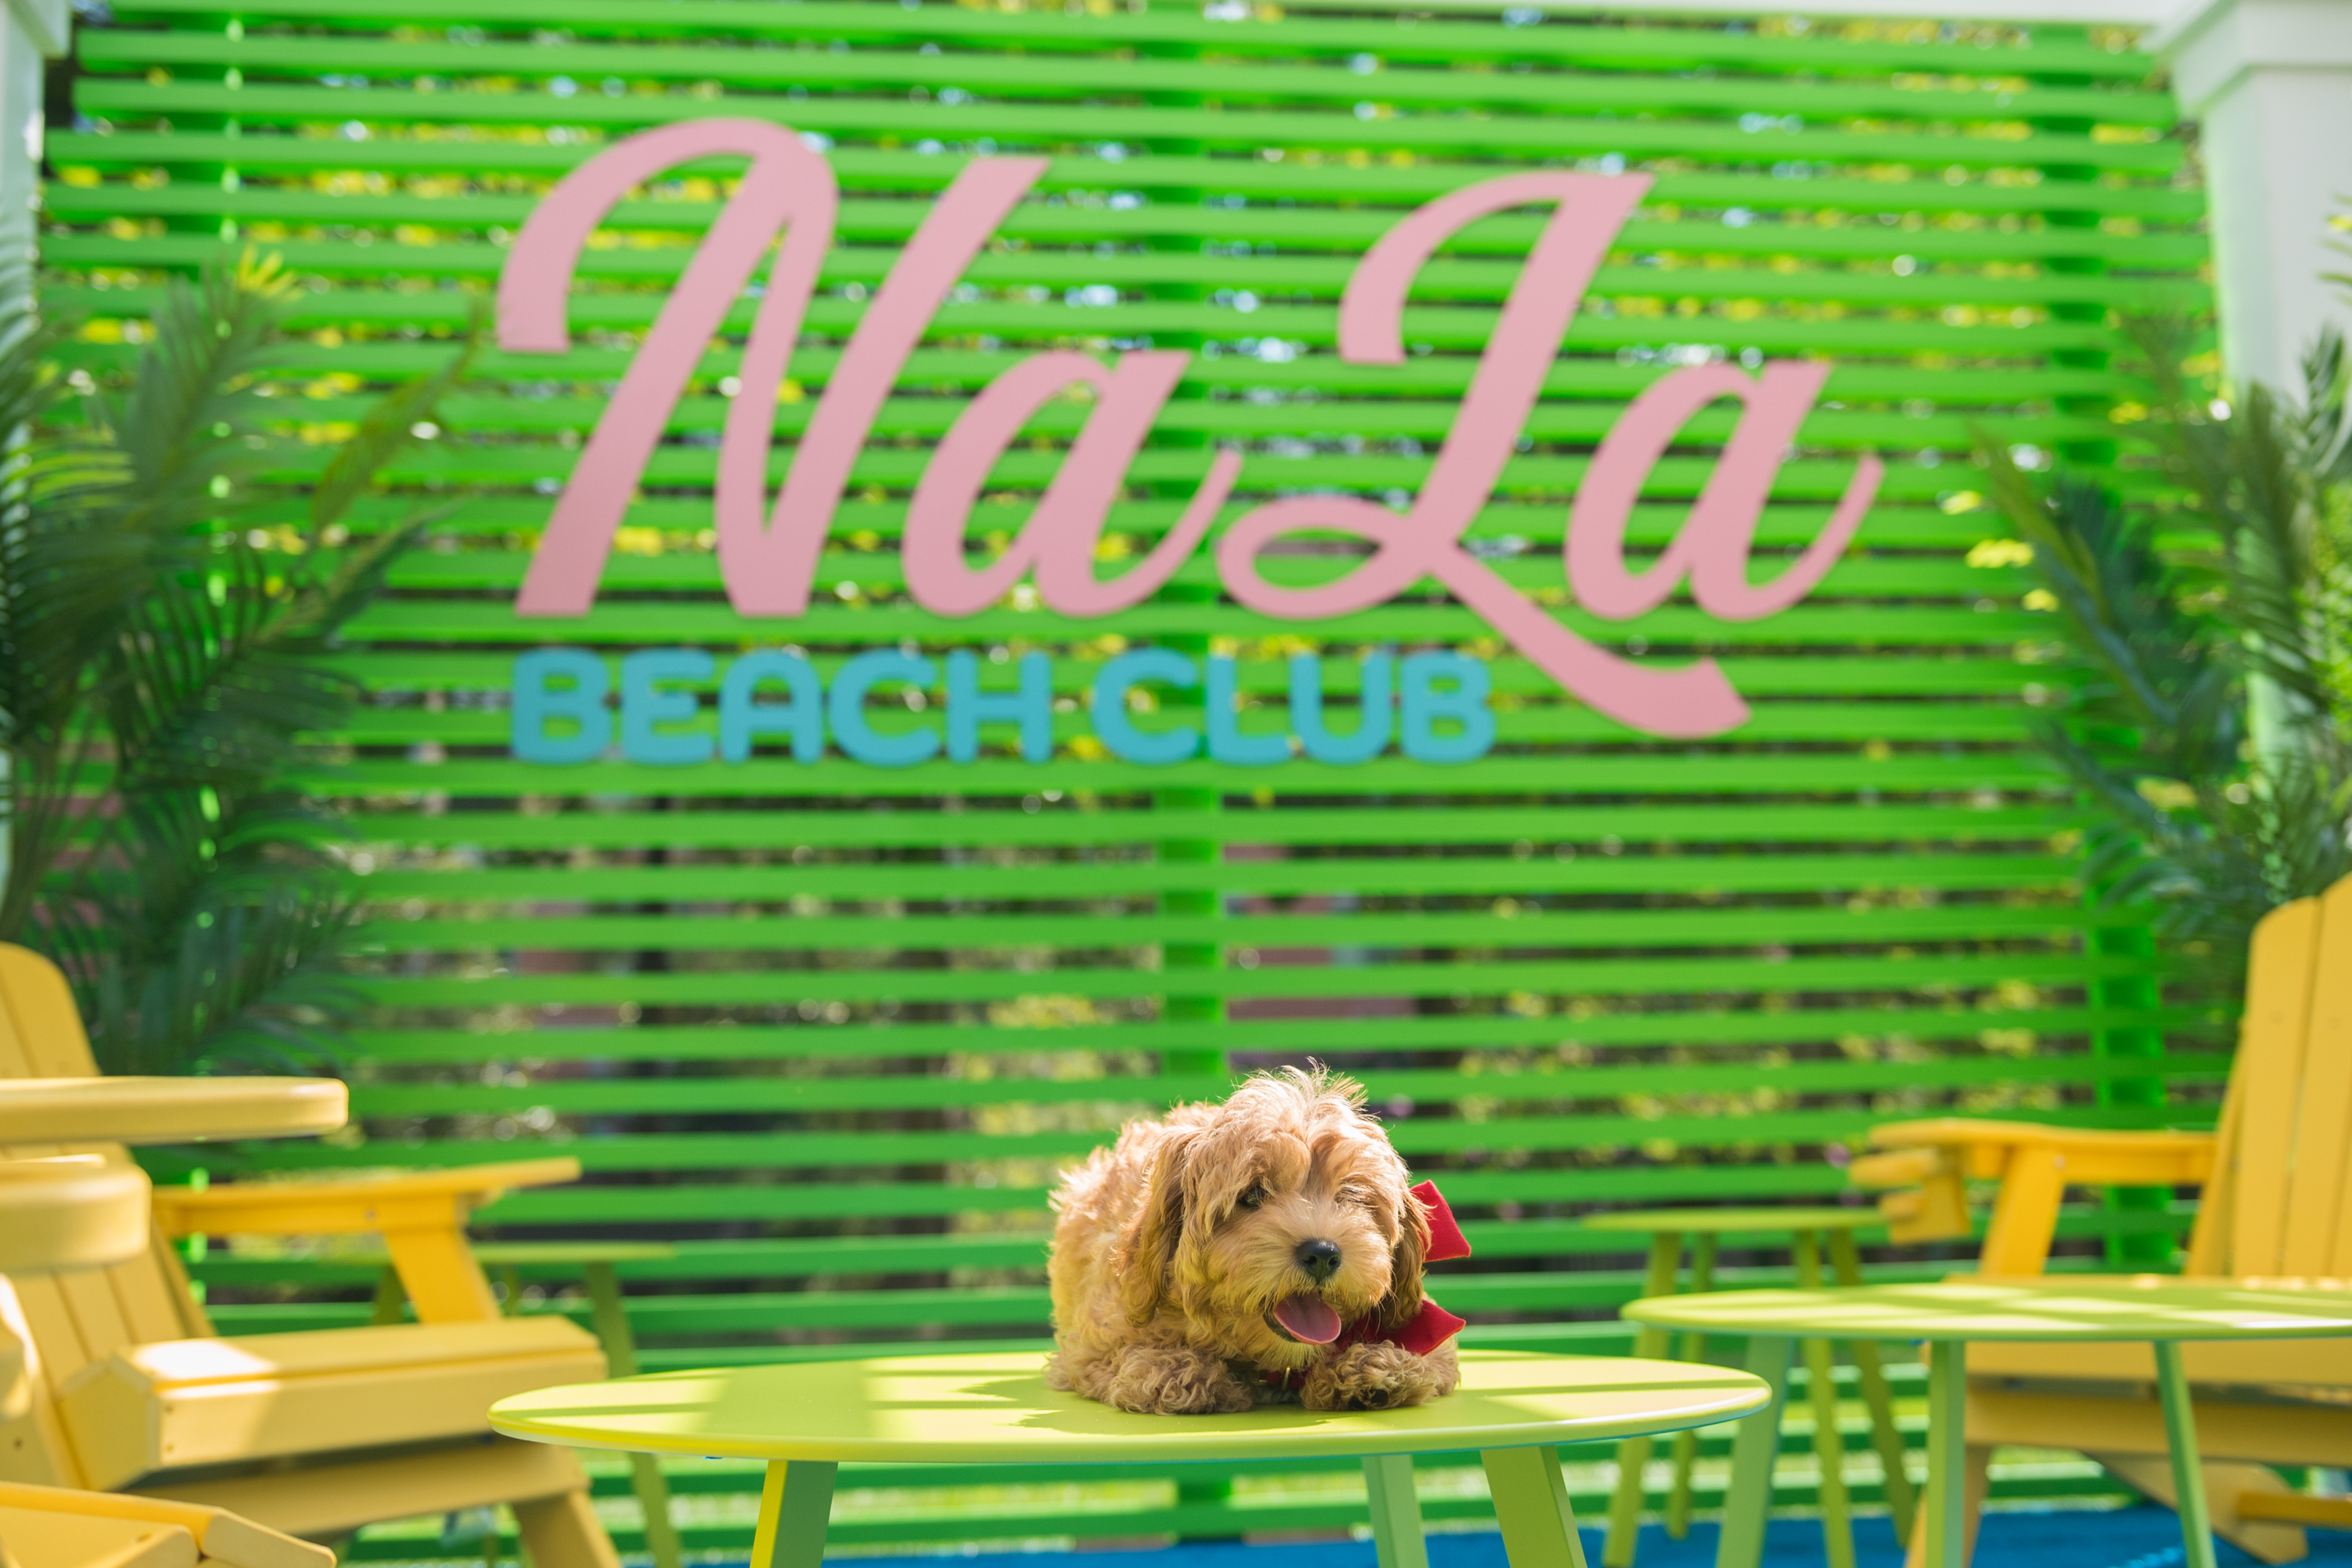 NaLa Beach Club: Bark at the Beach 1